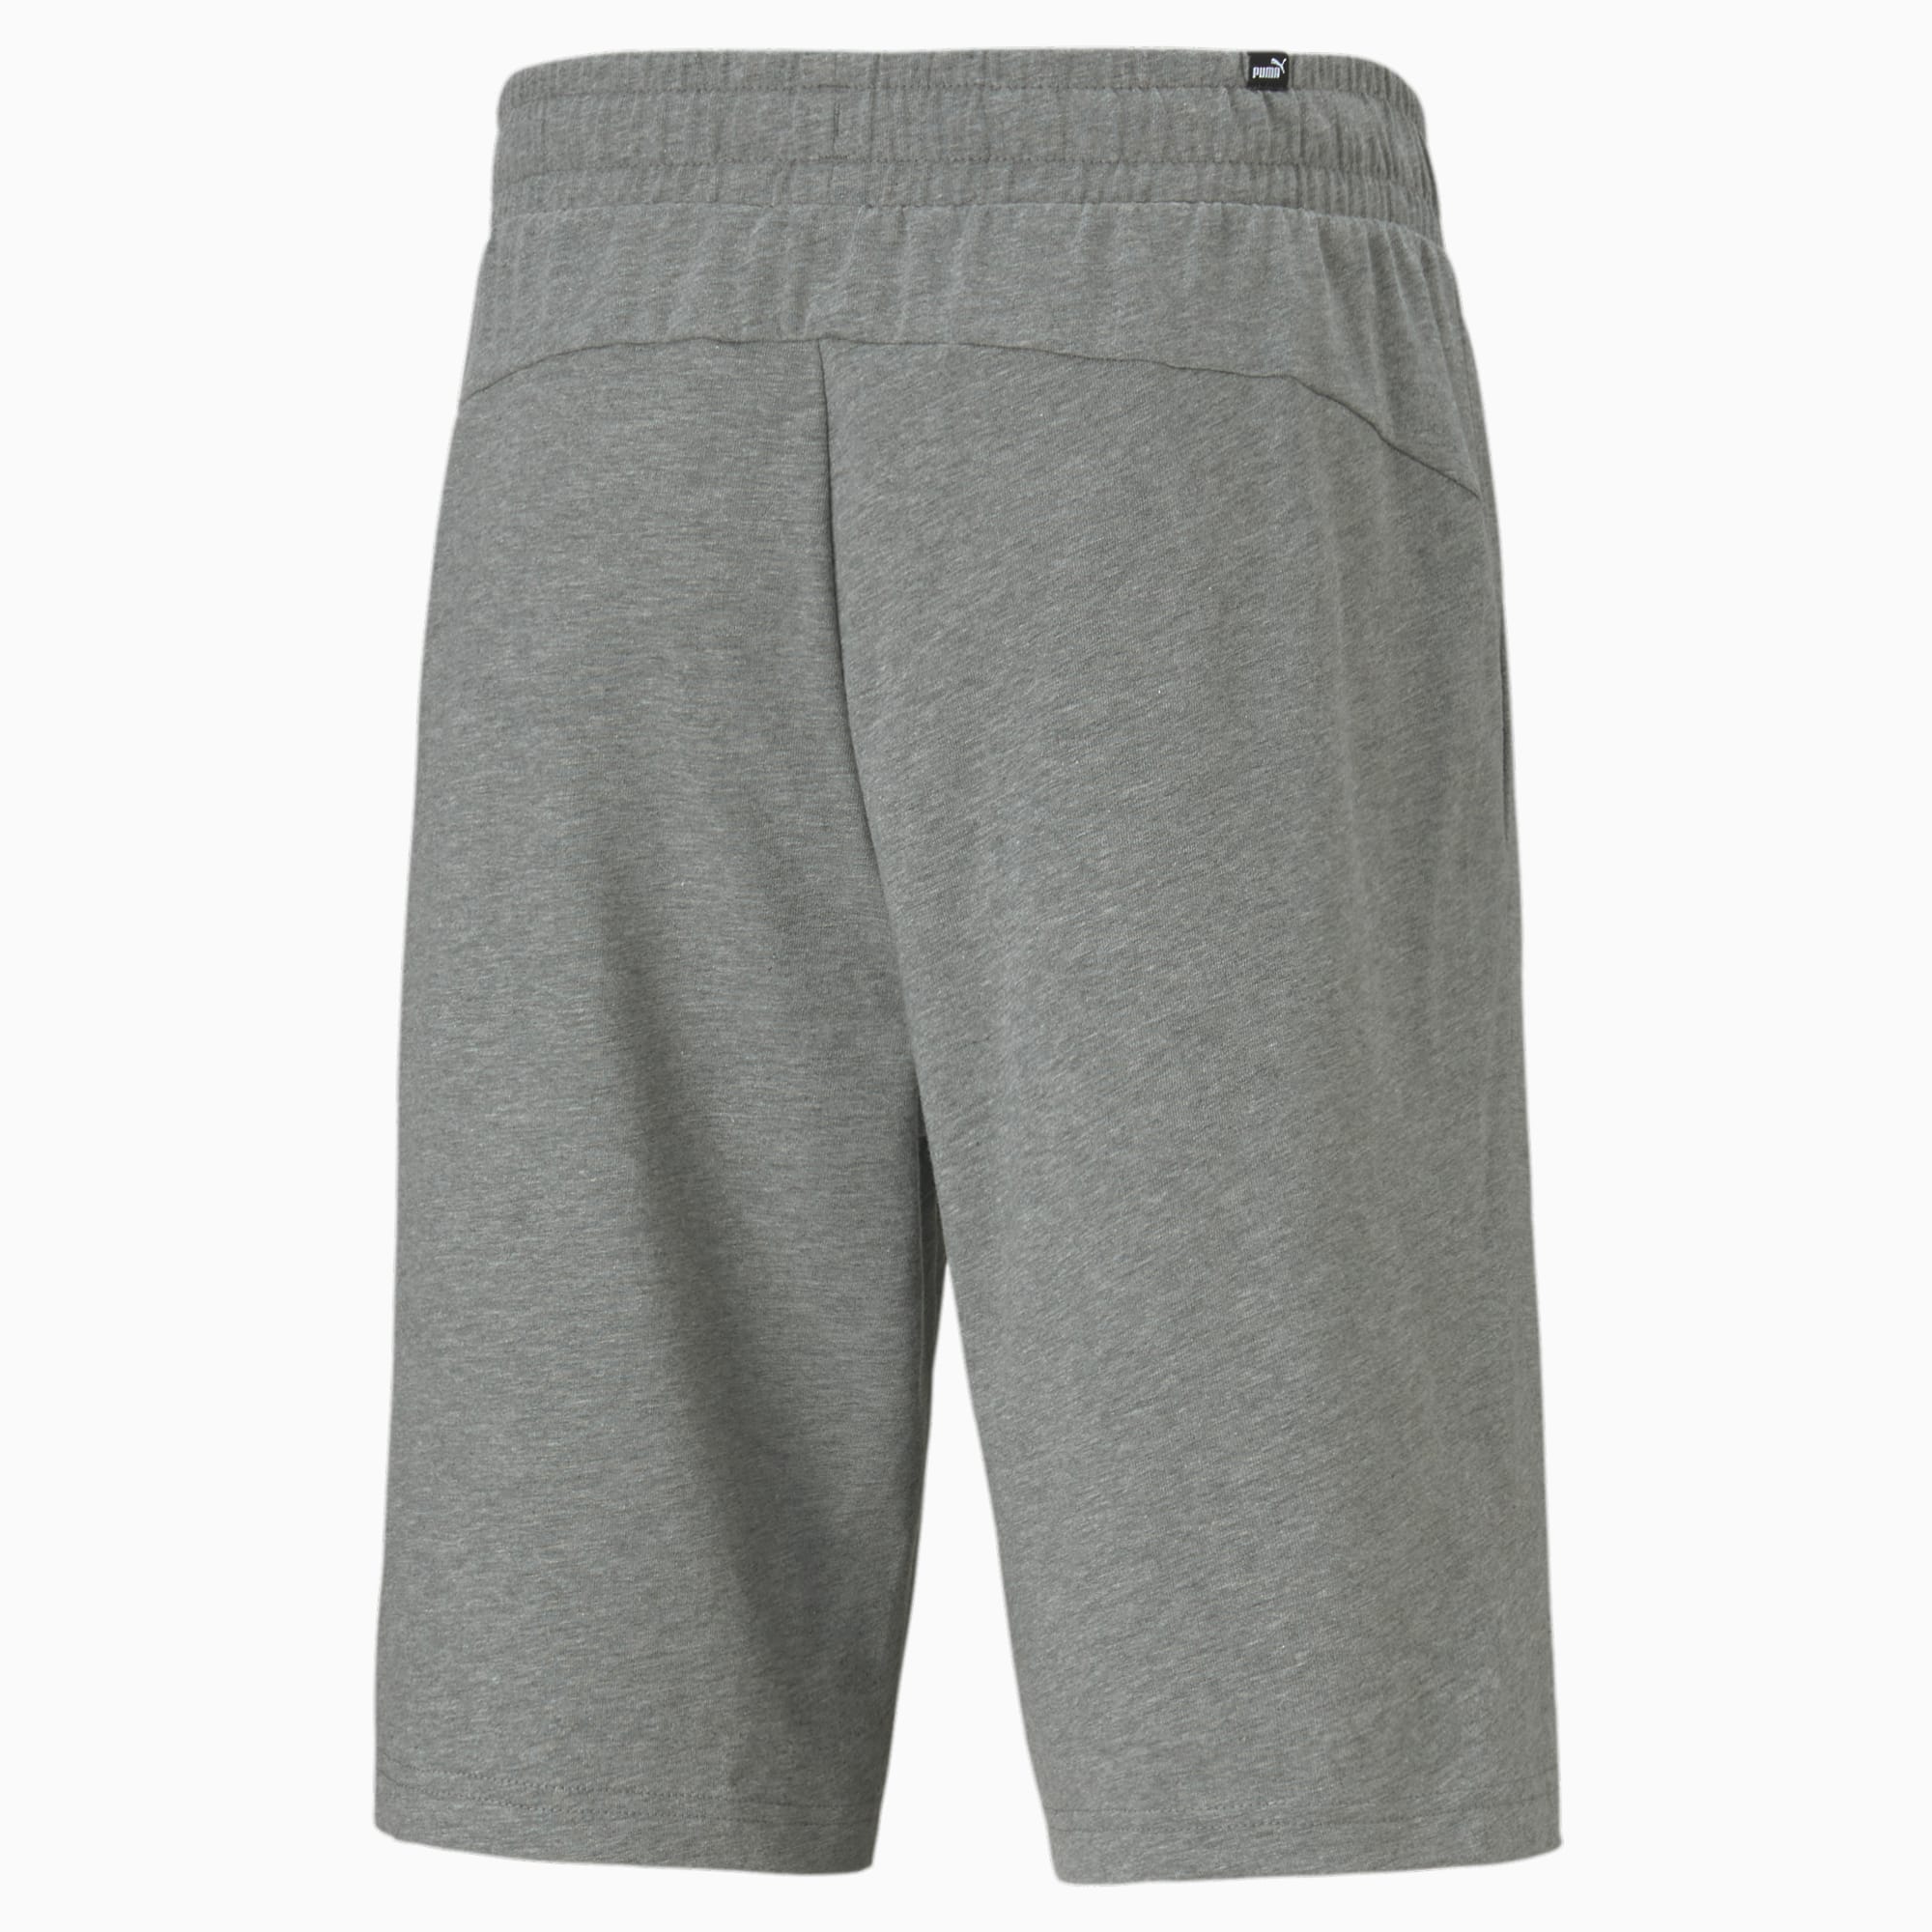 PUMA Essentials Jersey Men's Shorts, Medium Grey Heather, Size XXL, Clothing